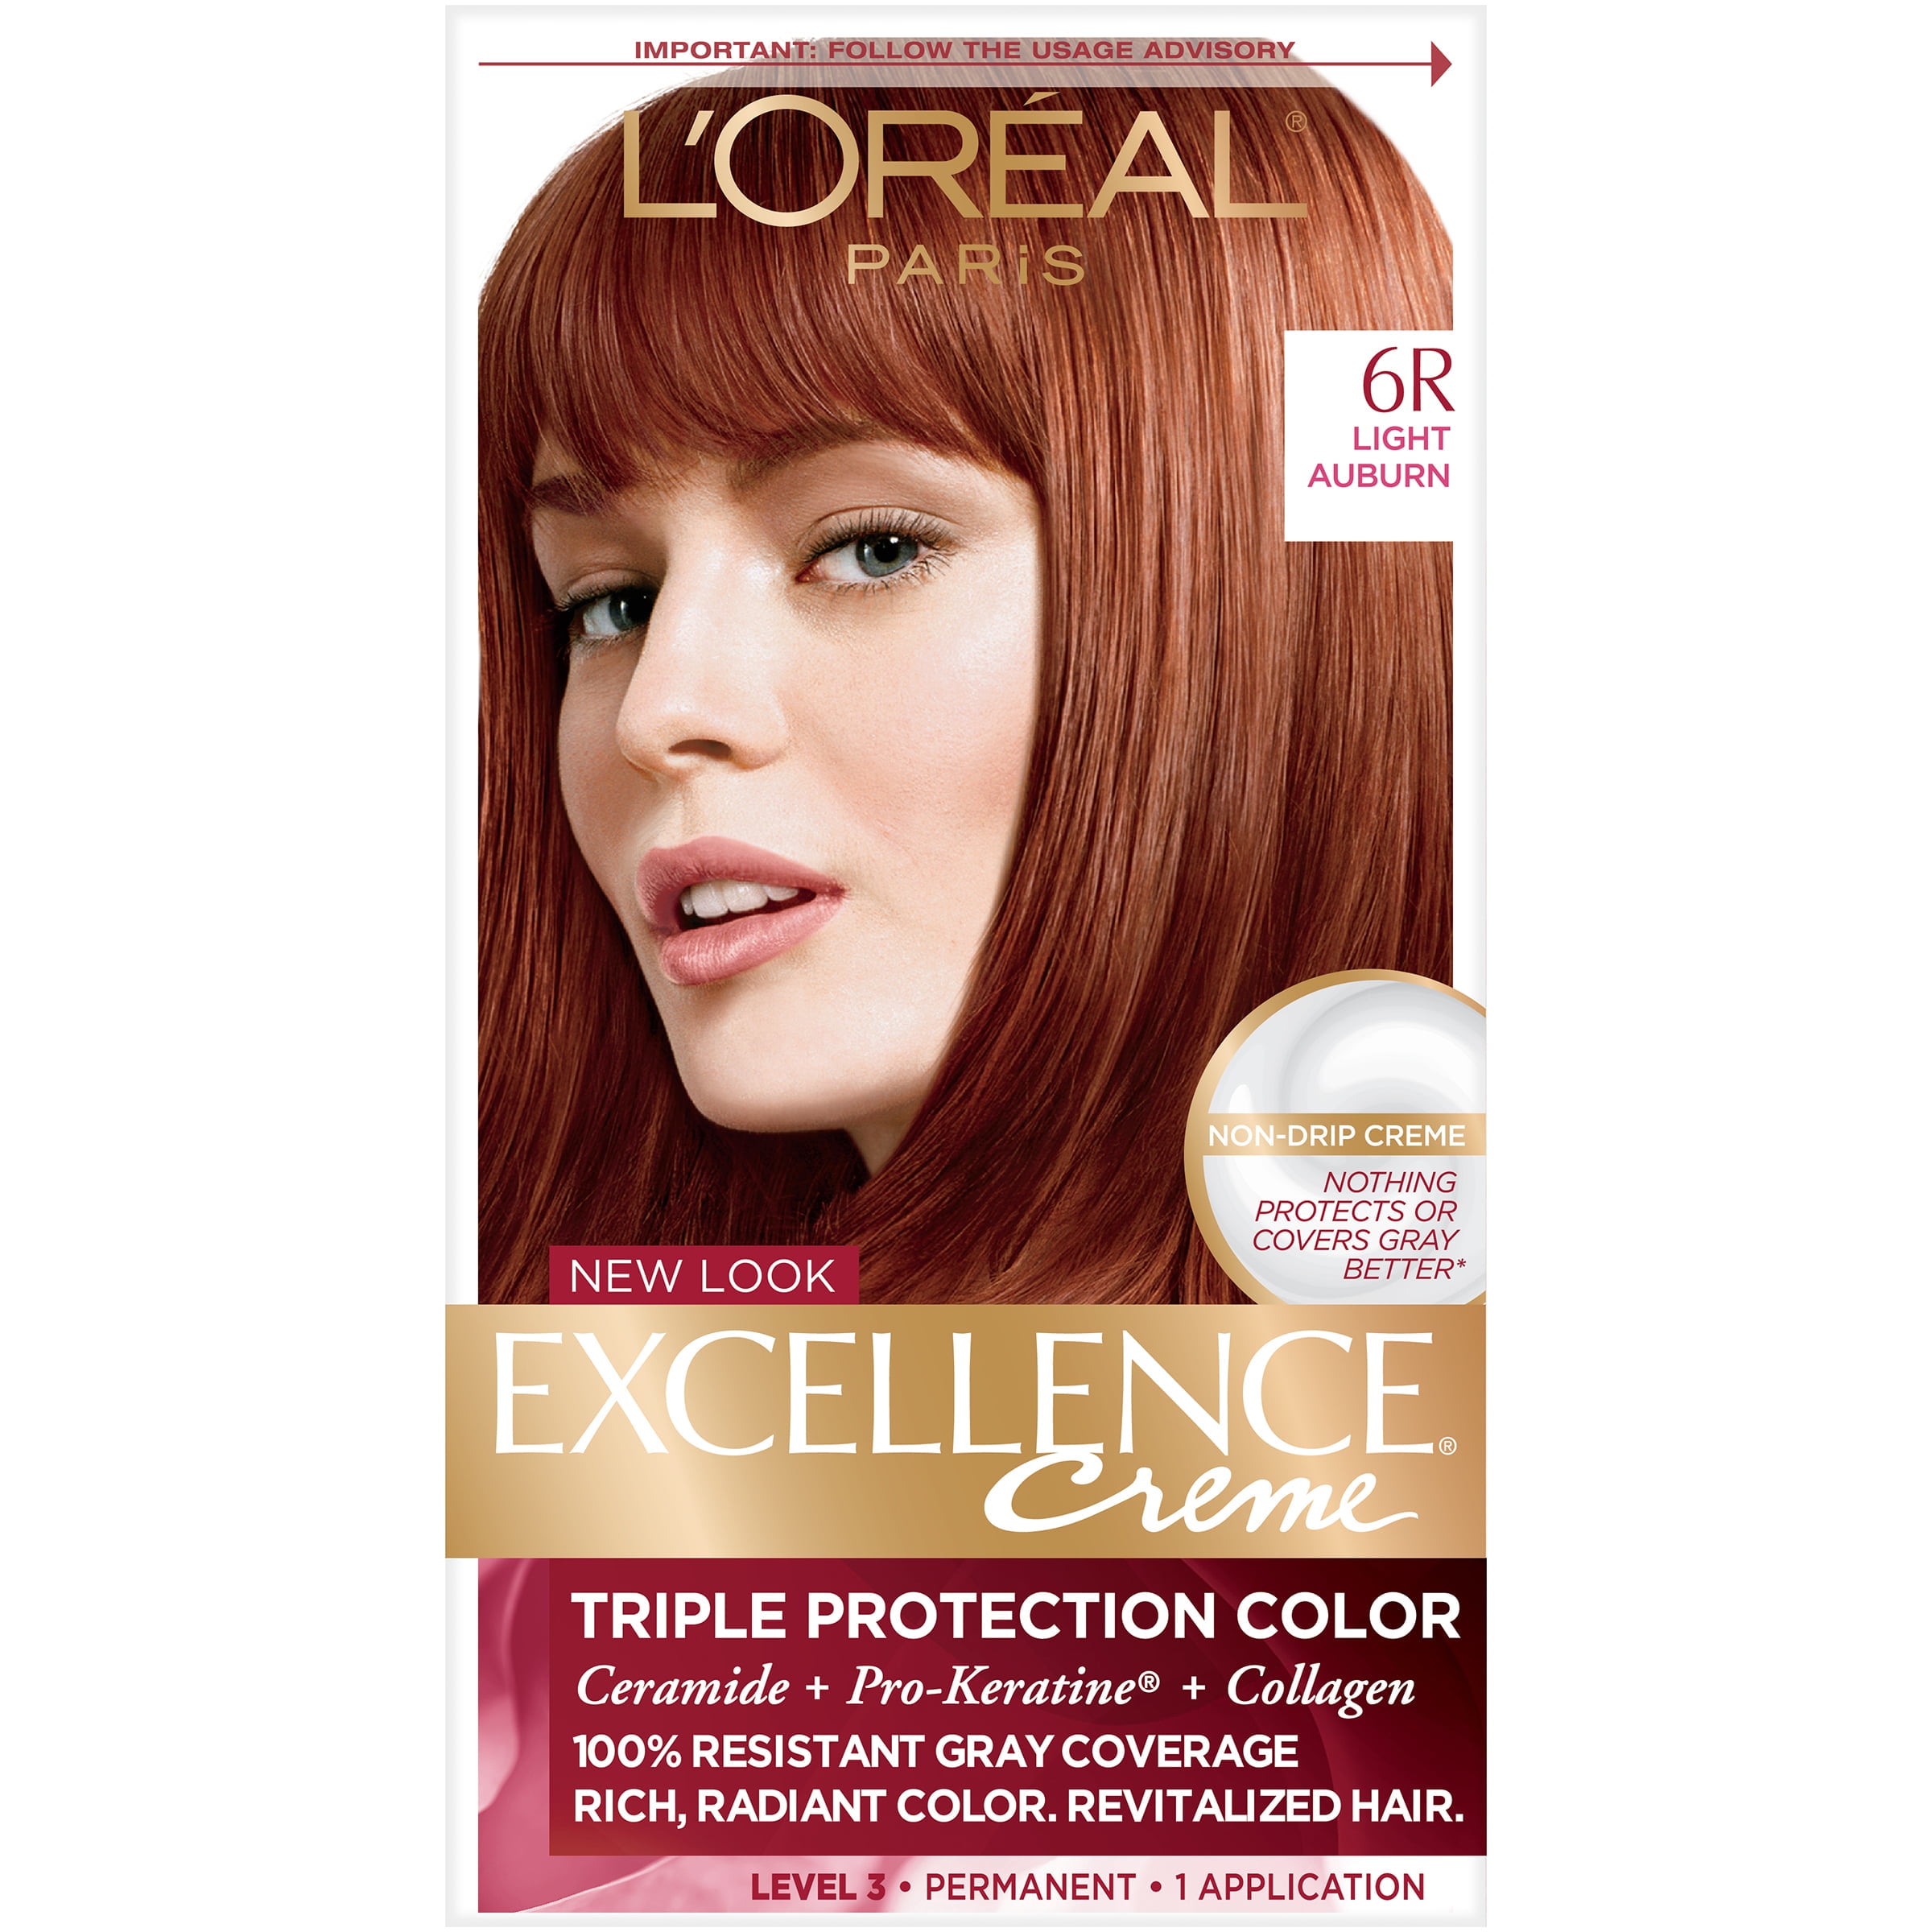 Opaque Stoop Nysgerrighed L'Oreal Paris Excellence Creme Permanent Hair Color, 6R Light Auburn -  Walmart.com